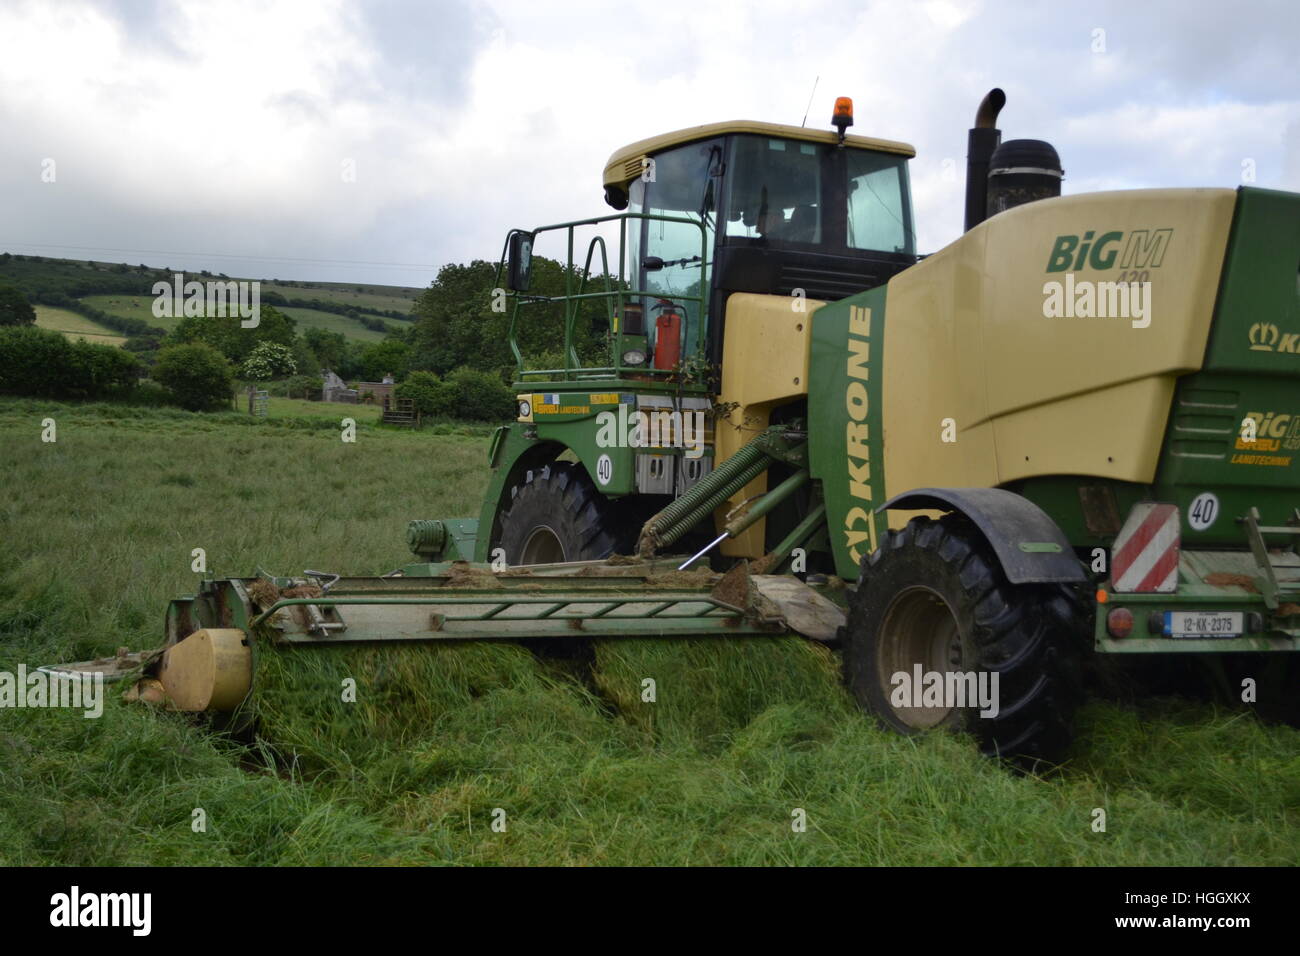 Krone BigM mowing grass Stock Photo